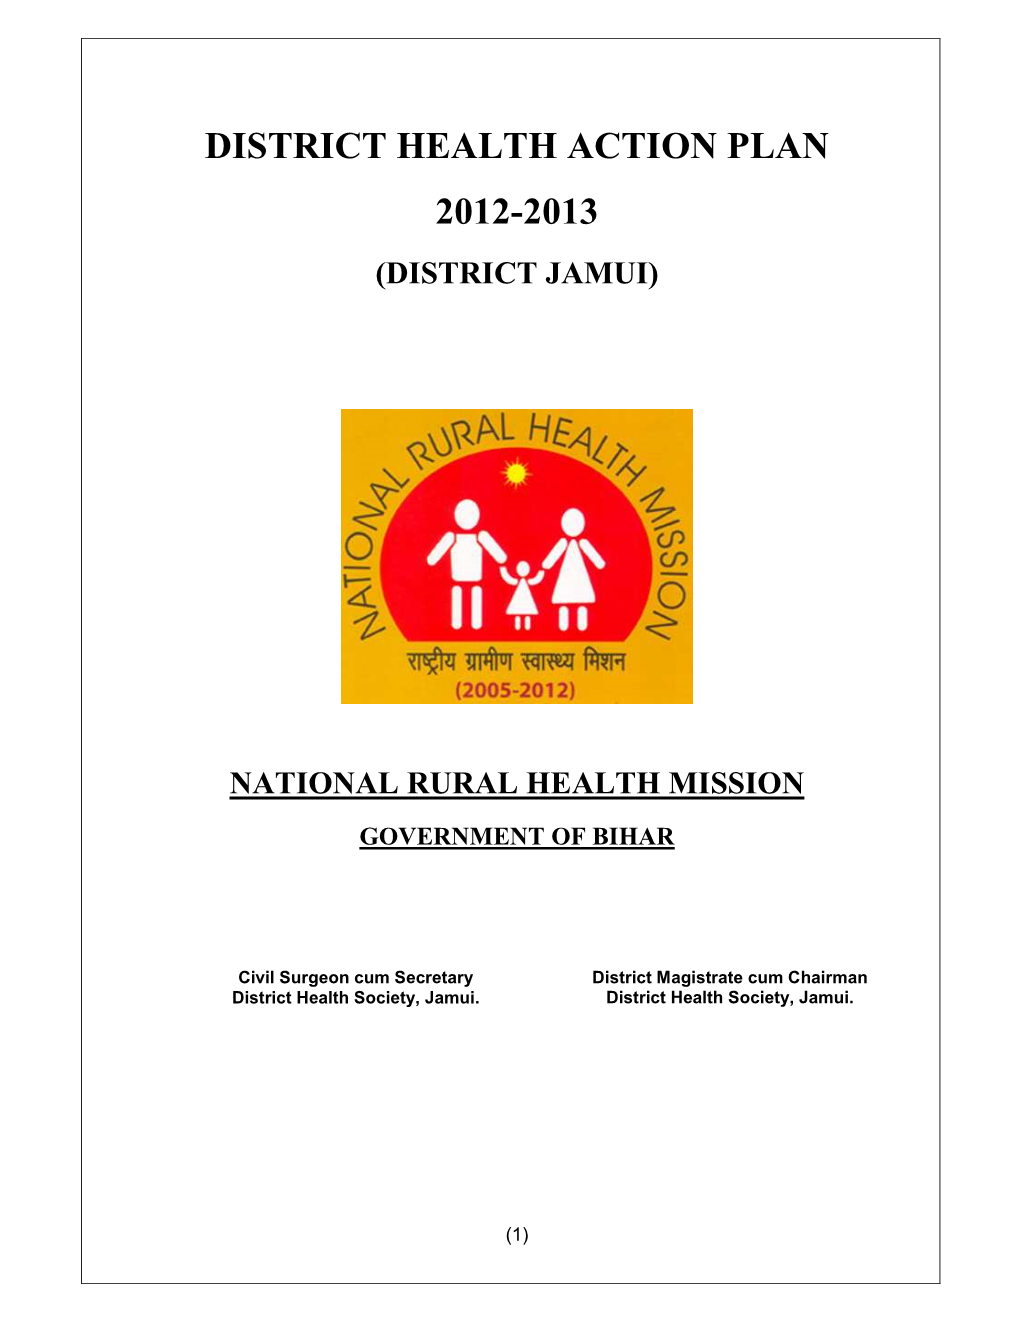 (District Jamui) National Rural Health Mission